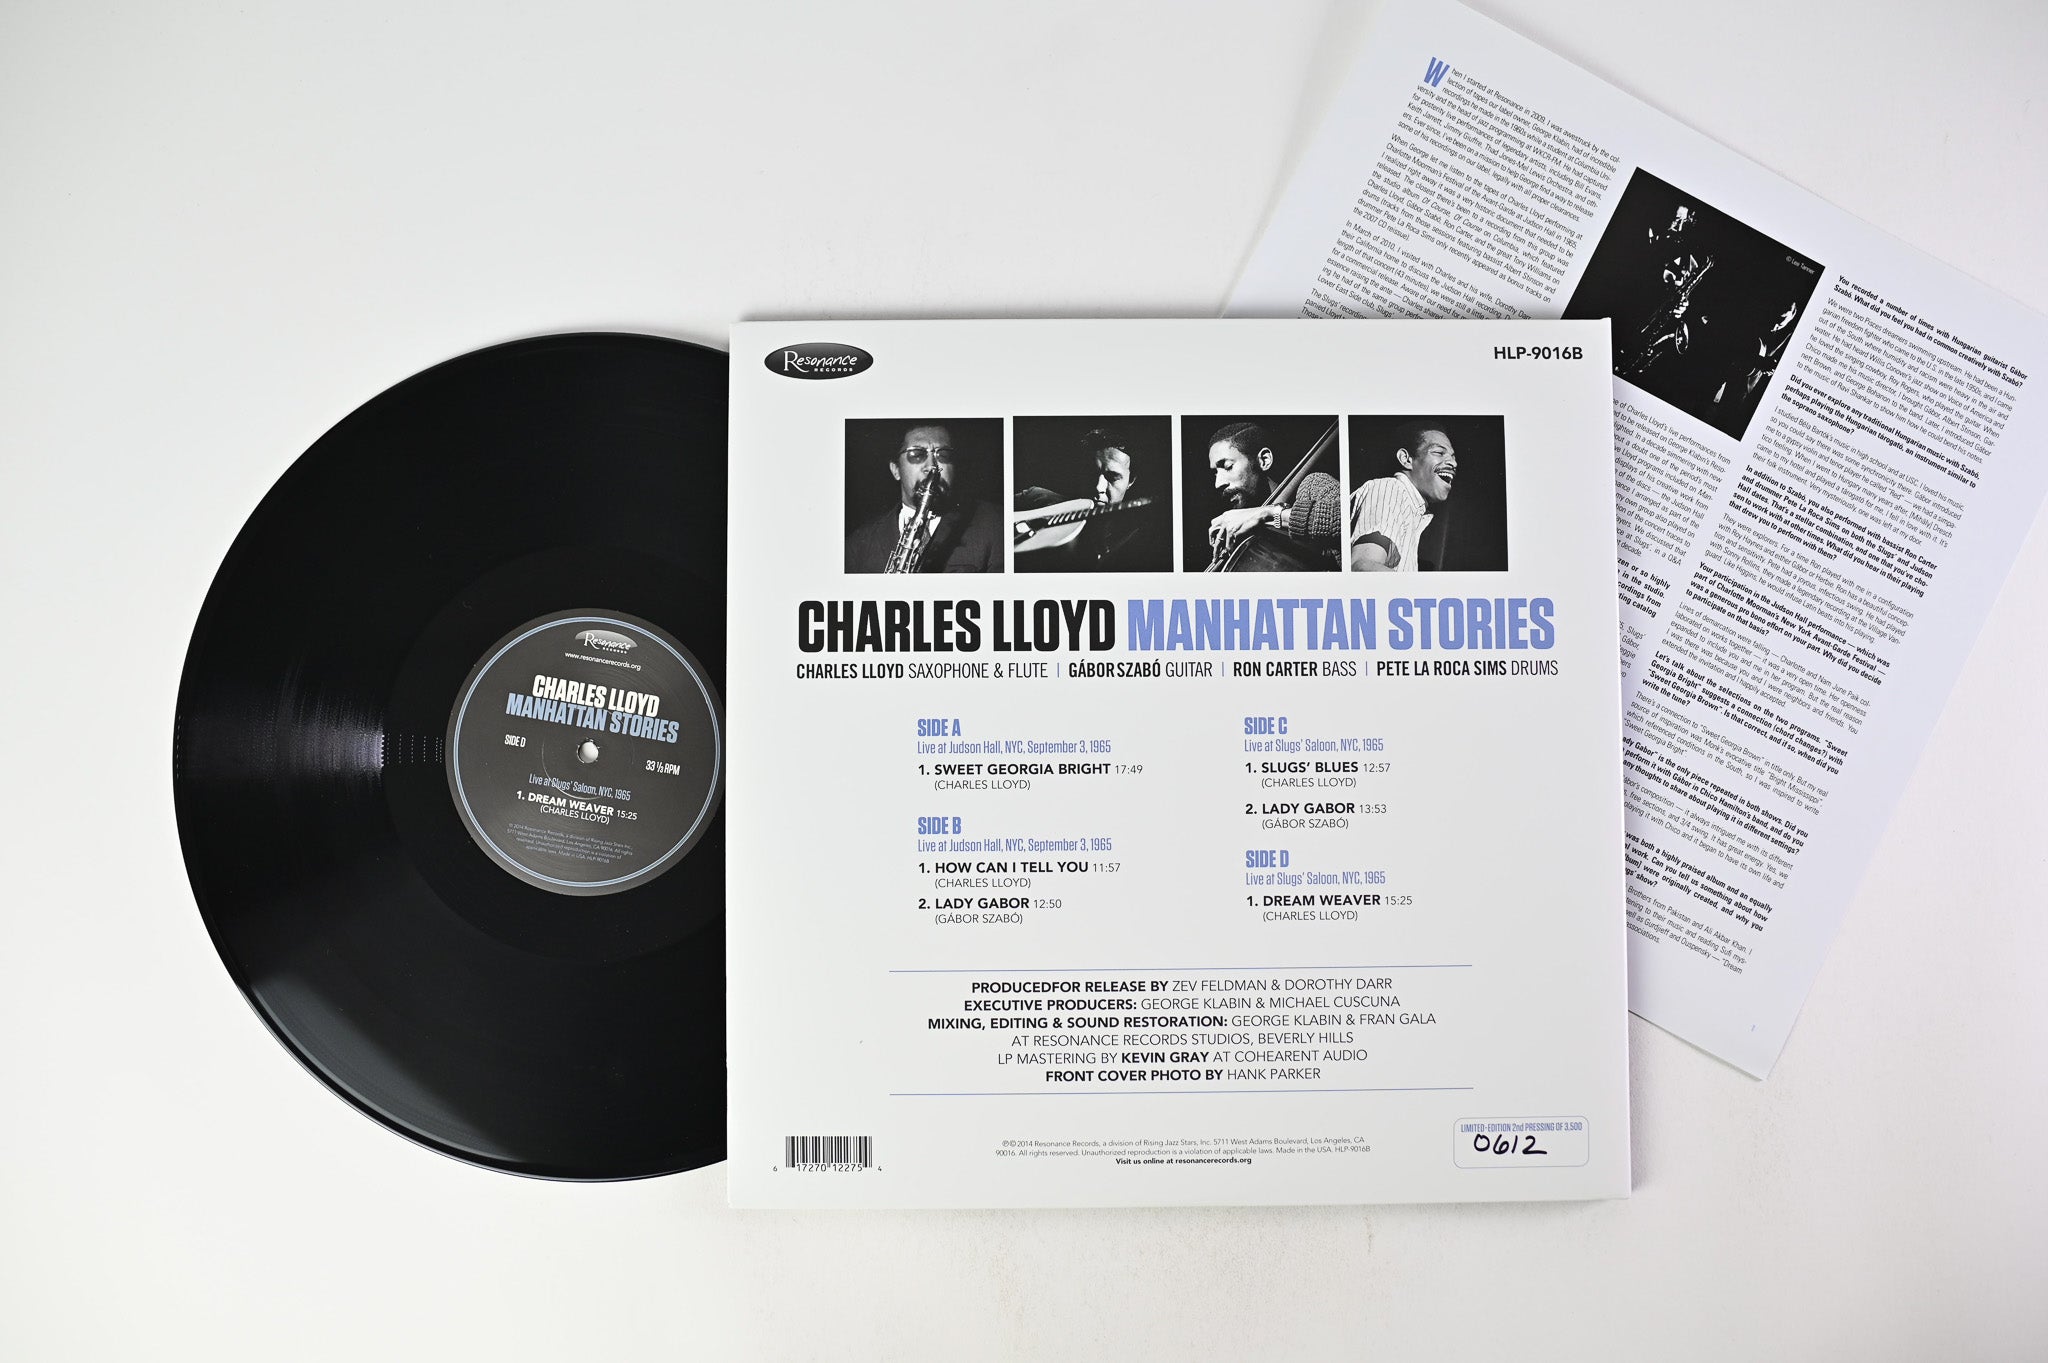 Charles Lloyd - Manhattan Stories Reissue, Numbered on Resonance Records